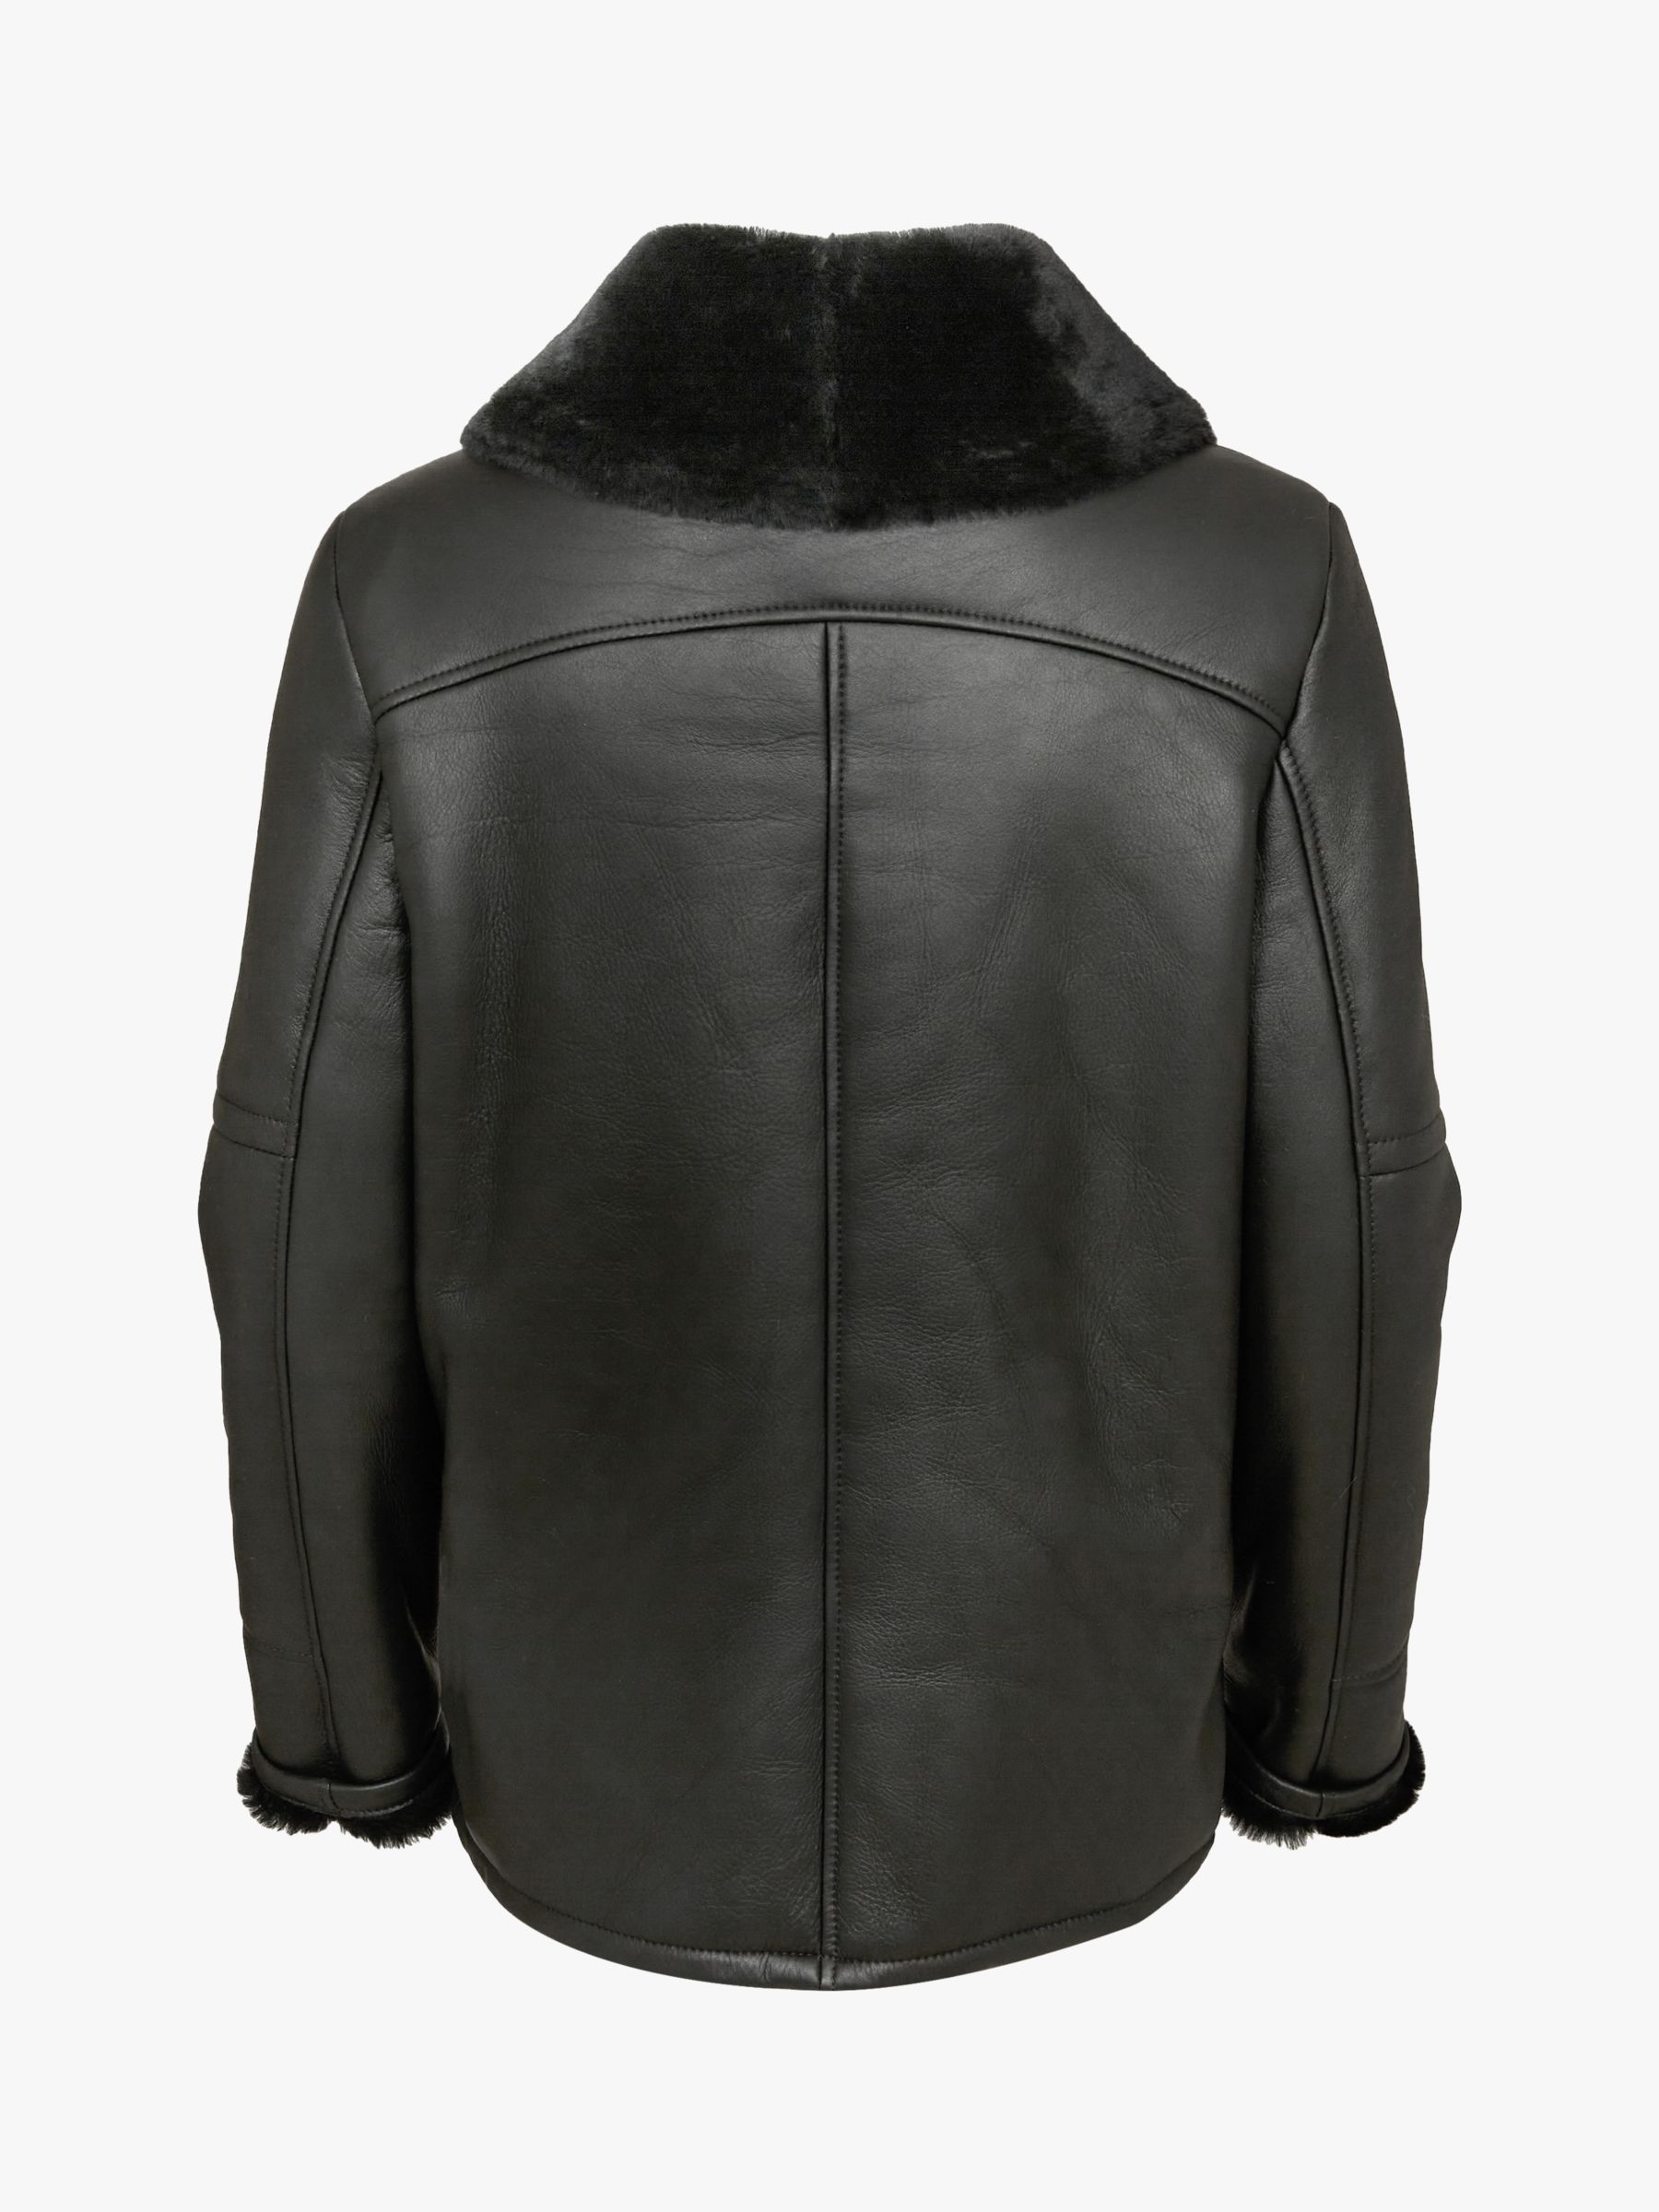 Celtic & Co. Leather Aviator Jacket, Black, 8